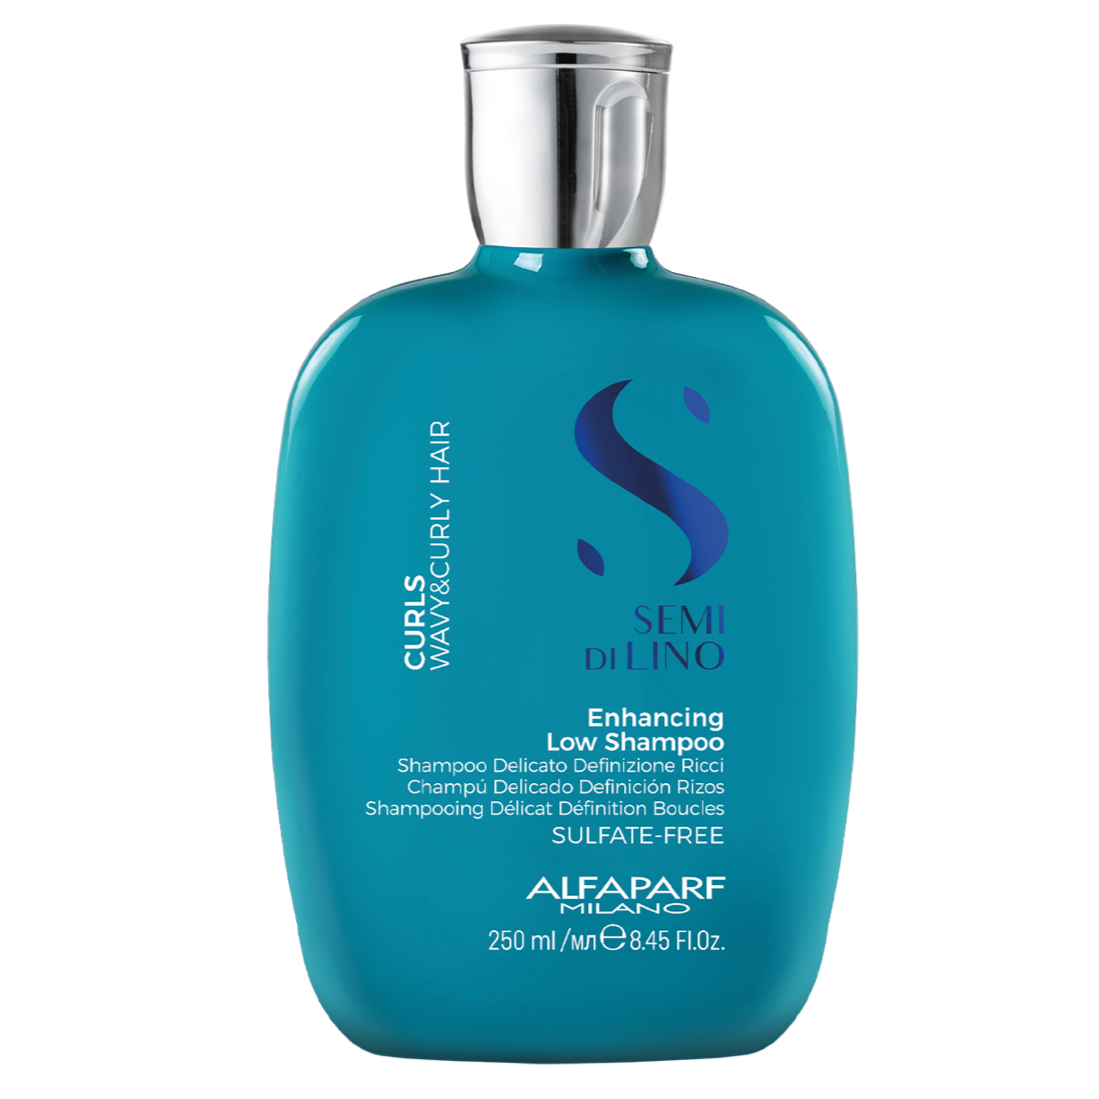 ALFAPARF MILANO Semi Di Lino Curls Enhancing Low Shampoo